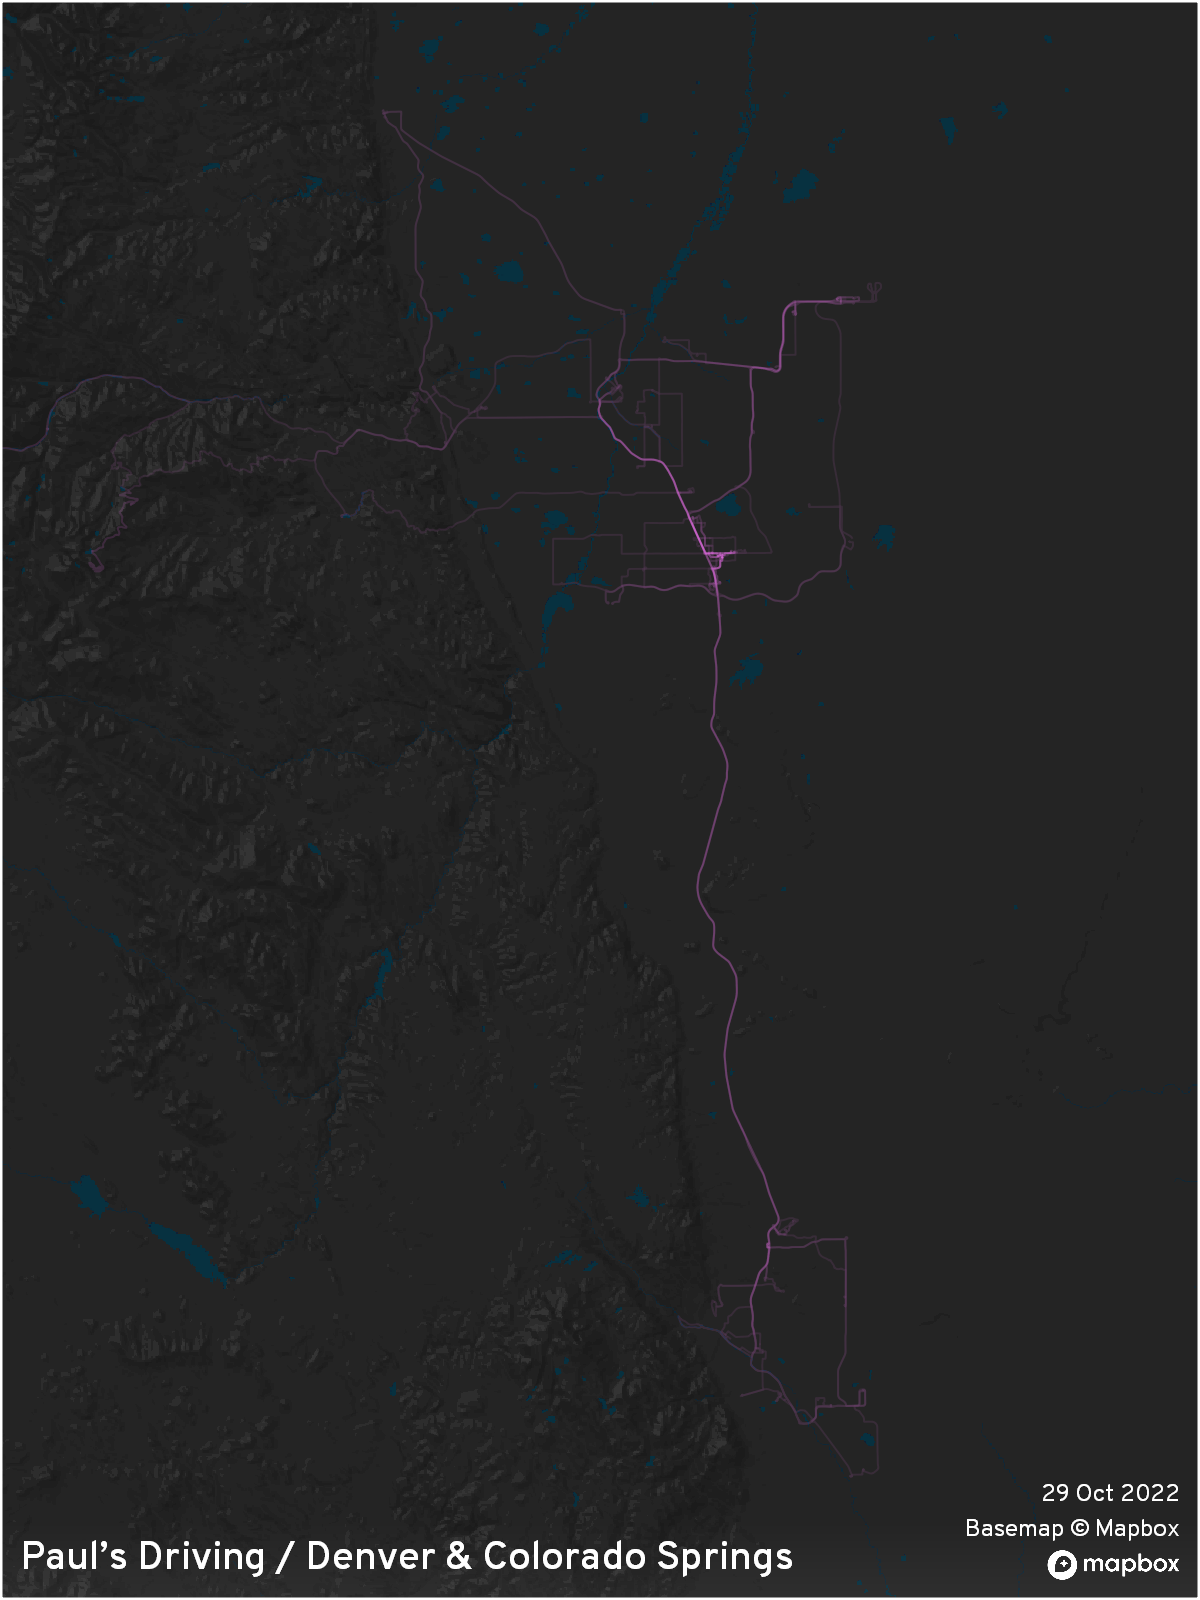 Driving density map of Denver and Colorado Springs, Colorado as of 29 Oct 2022.